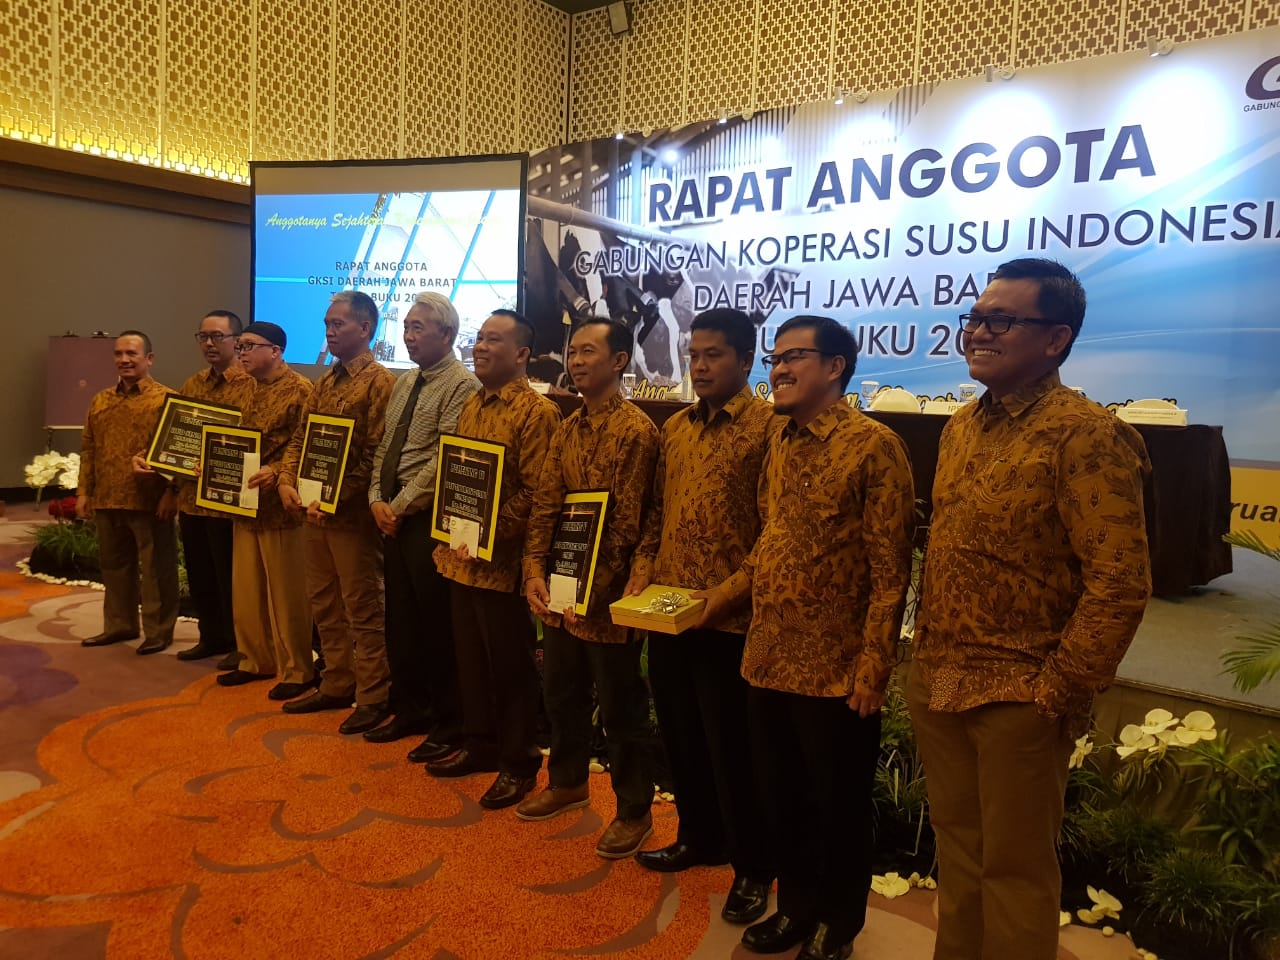 Rapat Anggota Tahunan Gabungan Koperasi Susu Indonesia (GKSI) daerah Jawa Barat 2020